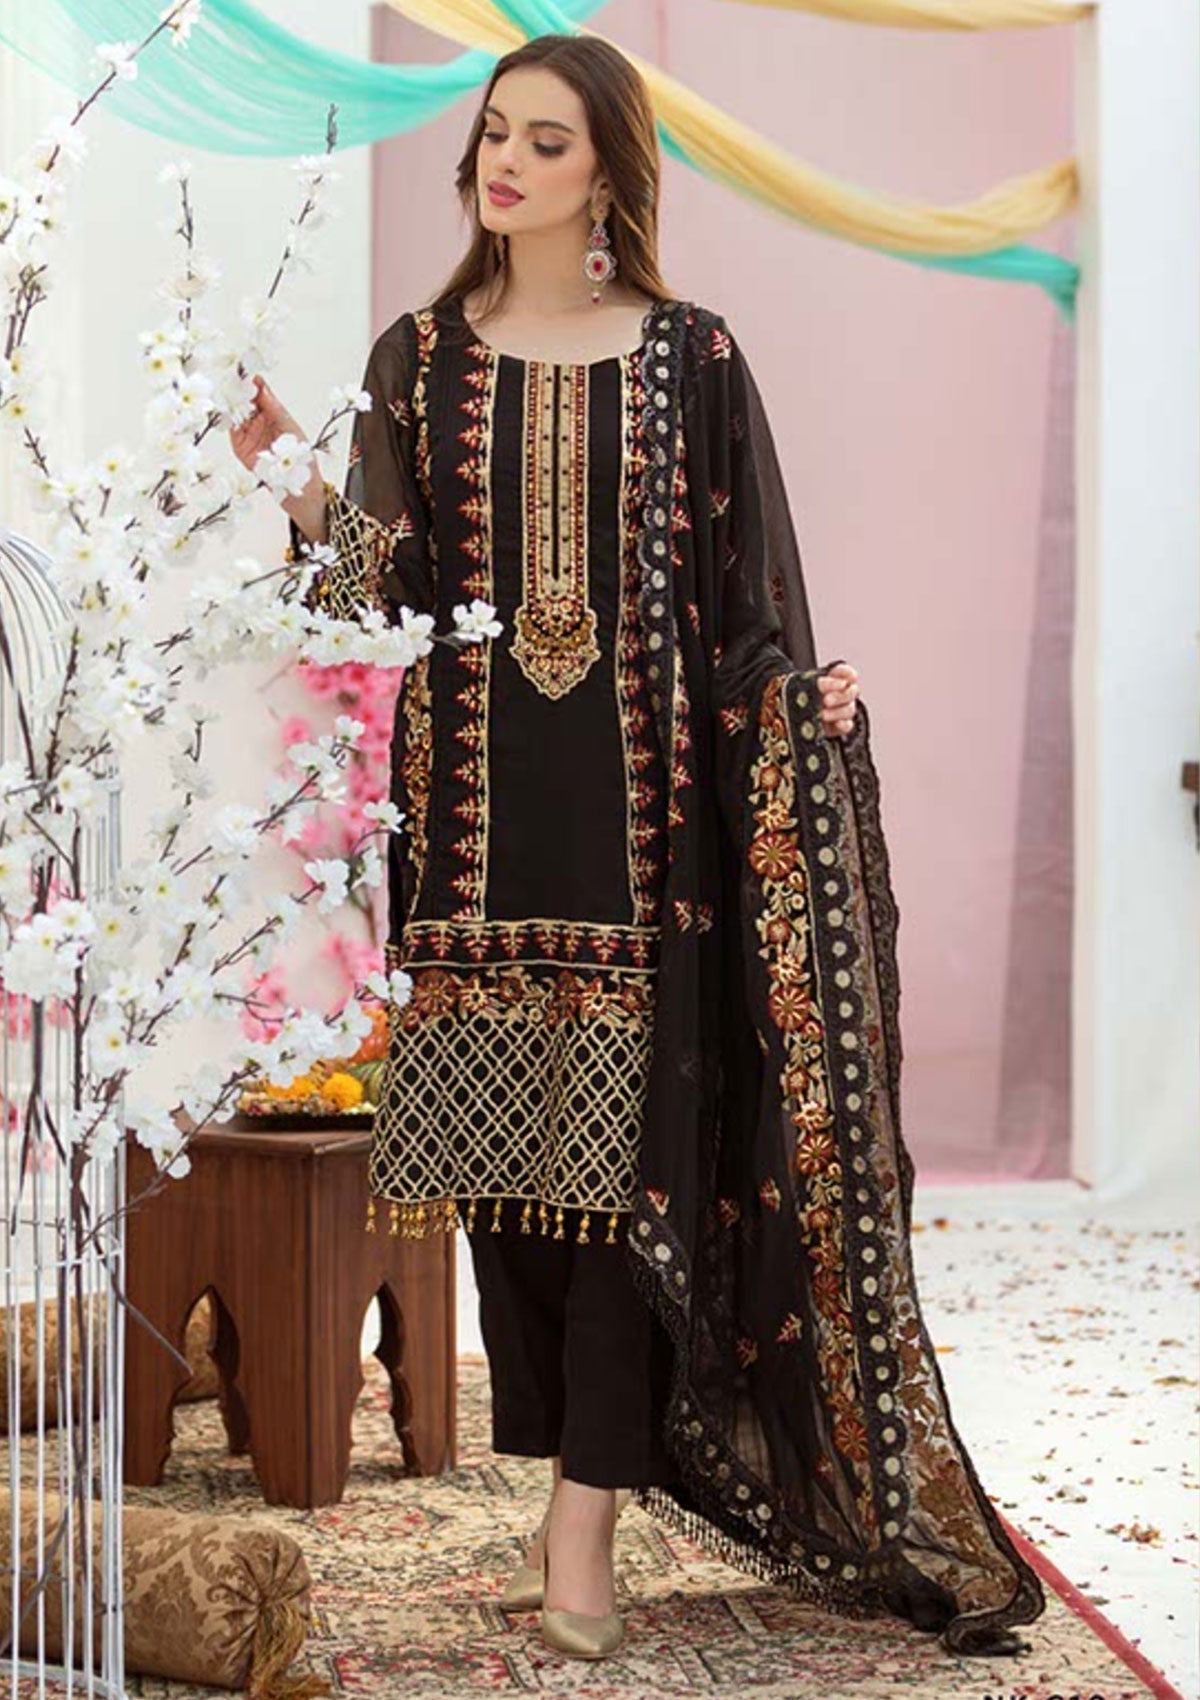 Formal Dress - Noorma kaamal - Noor Jahan - NKC#10 available at Saleem Fabrics Traditions